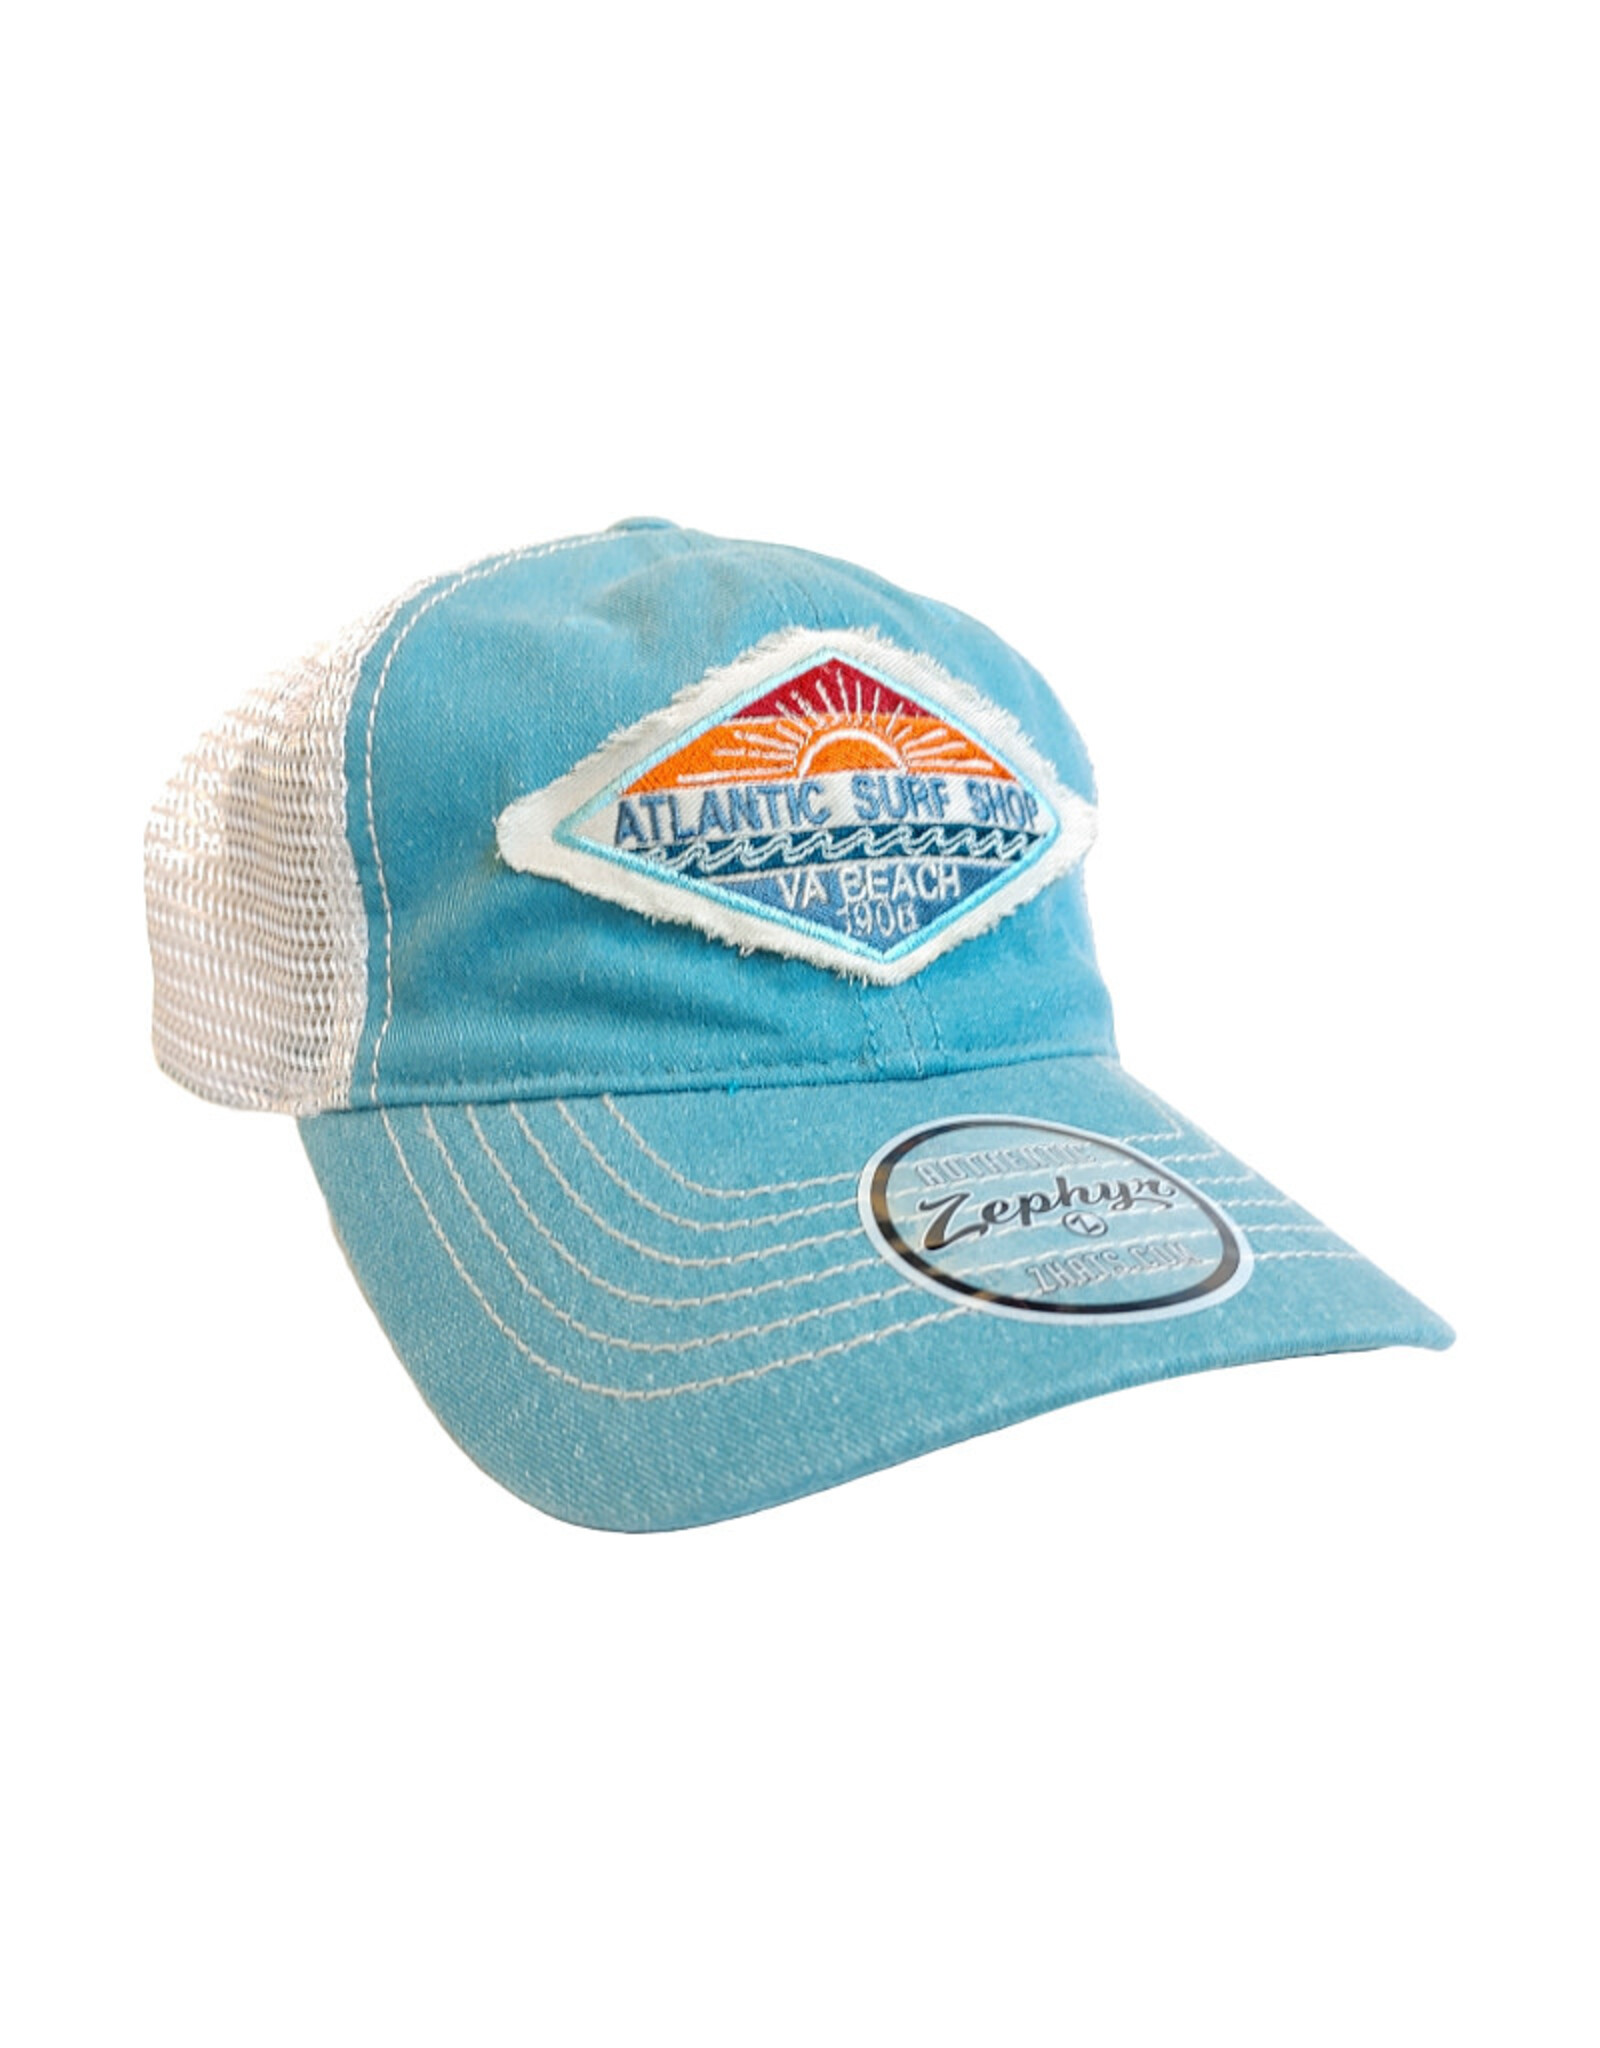 Atlantic Surf Co Atlantic Surf Shop Sun Diamond Trucker Hat Turquoise